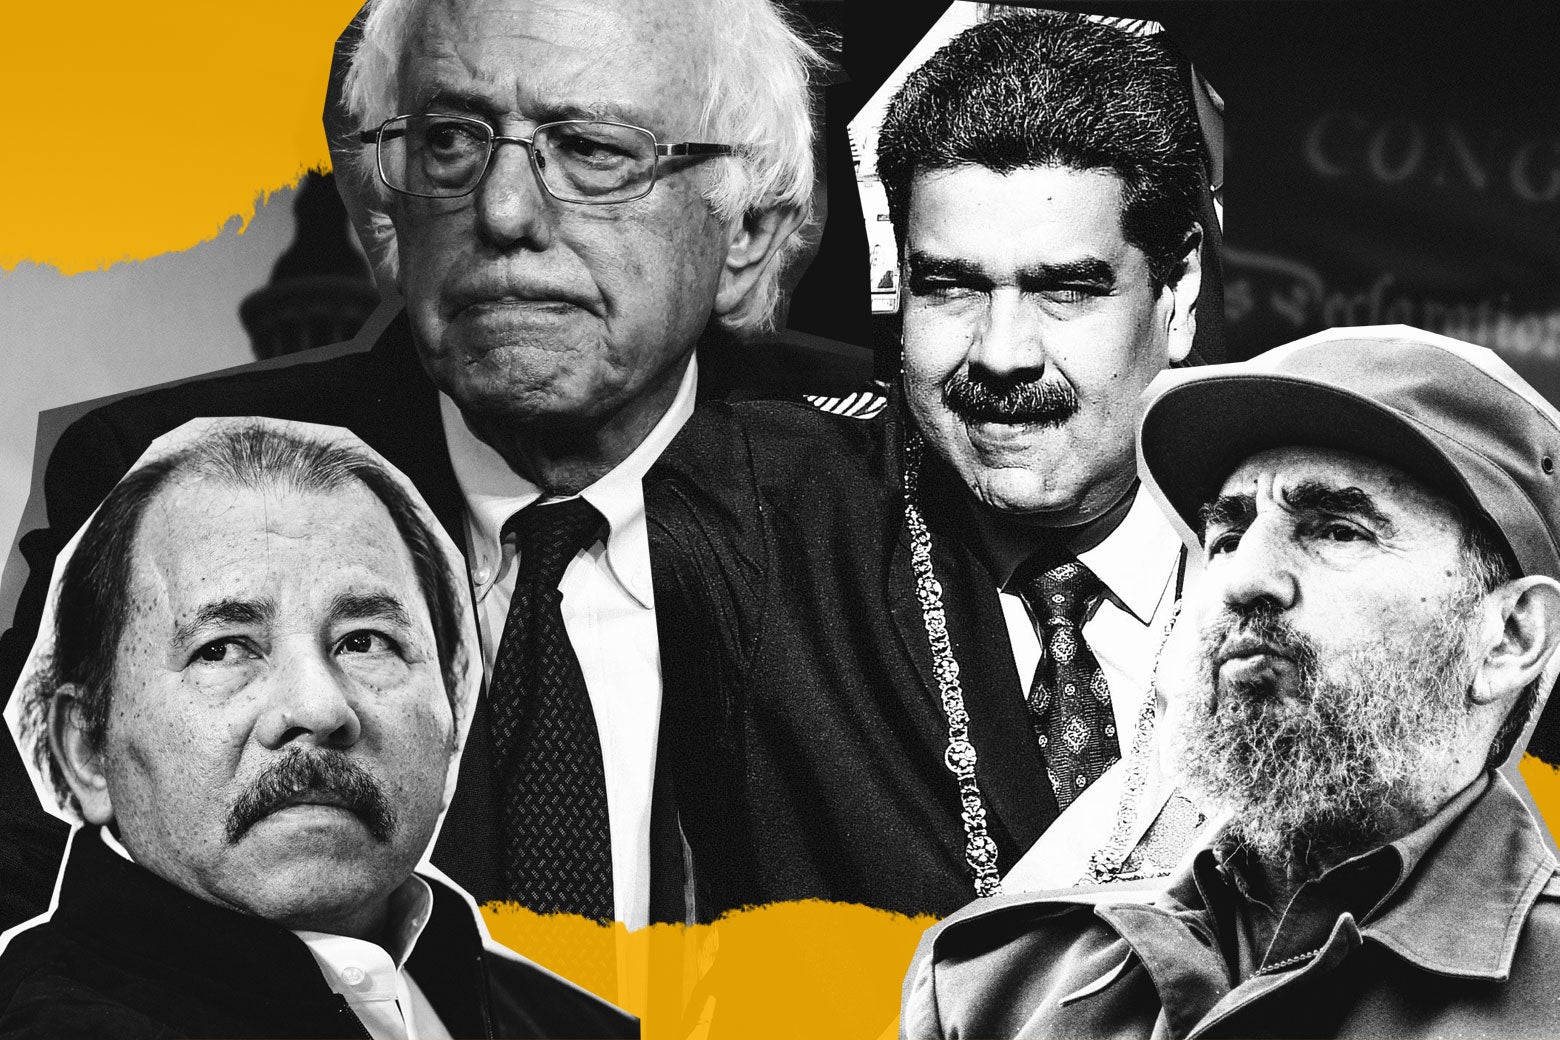 A collage of Bernie Sanders surrounded by Daniel Ortega, Nicolás Maduro, and Fidel Castro.